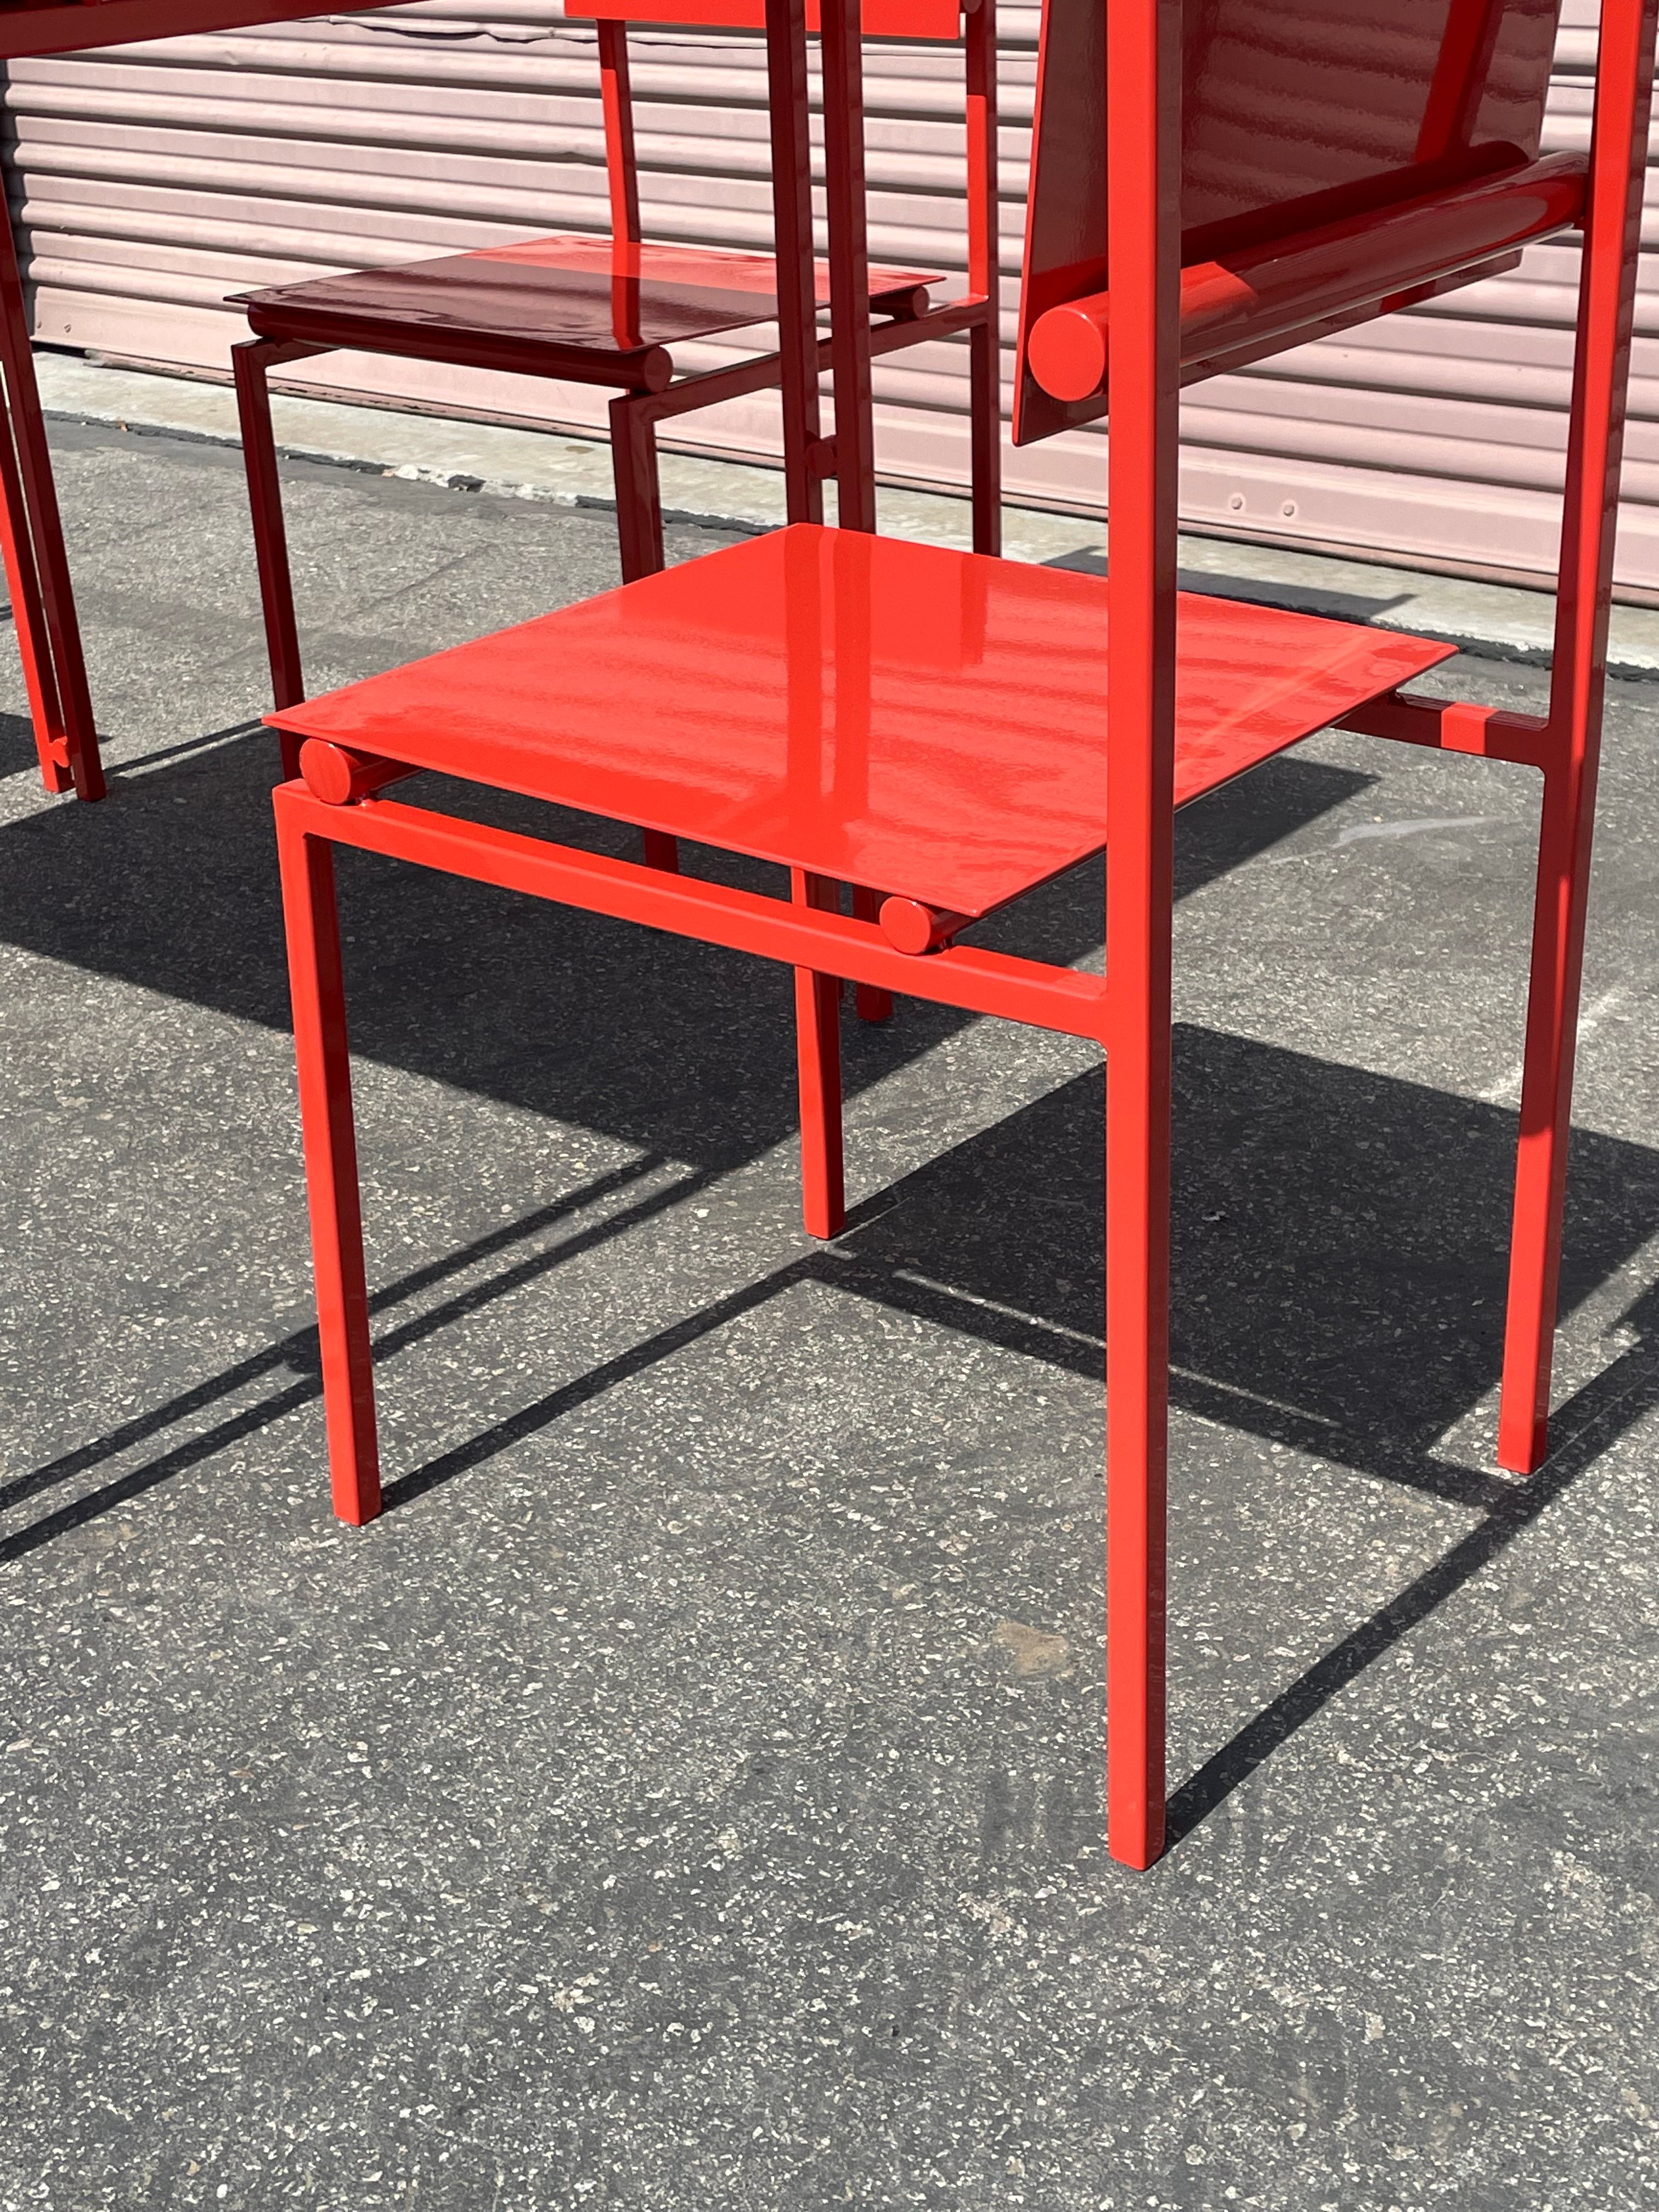  Red Metal Suspension Set product image 6